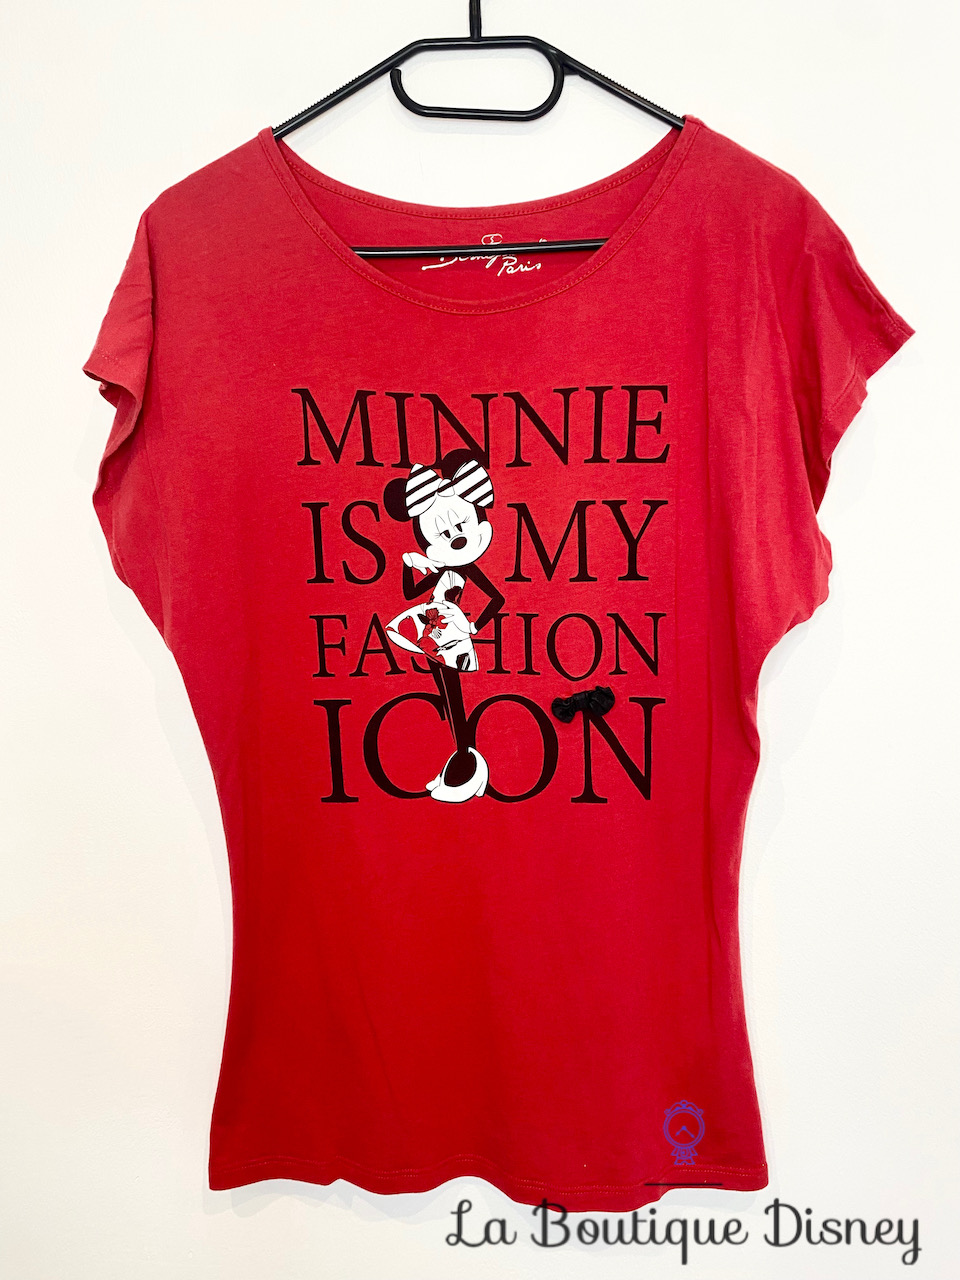 Tee shirt Minnie Is my fashion Icon Disneyland Paris Disney taille S mode rouge